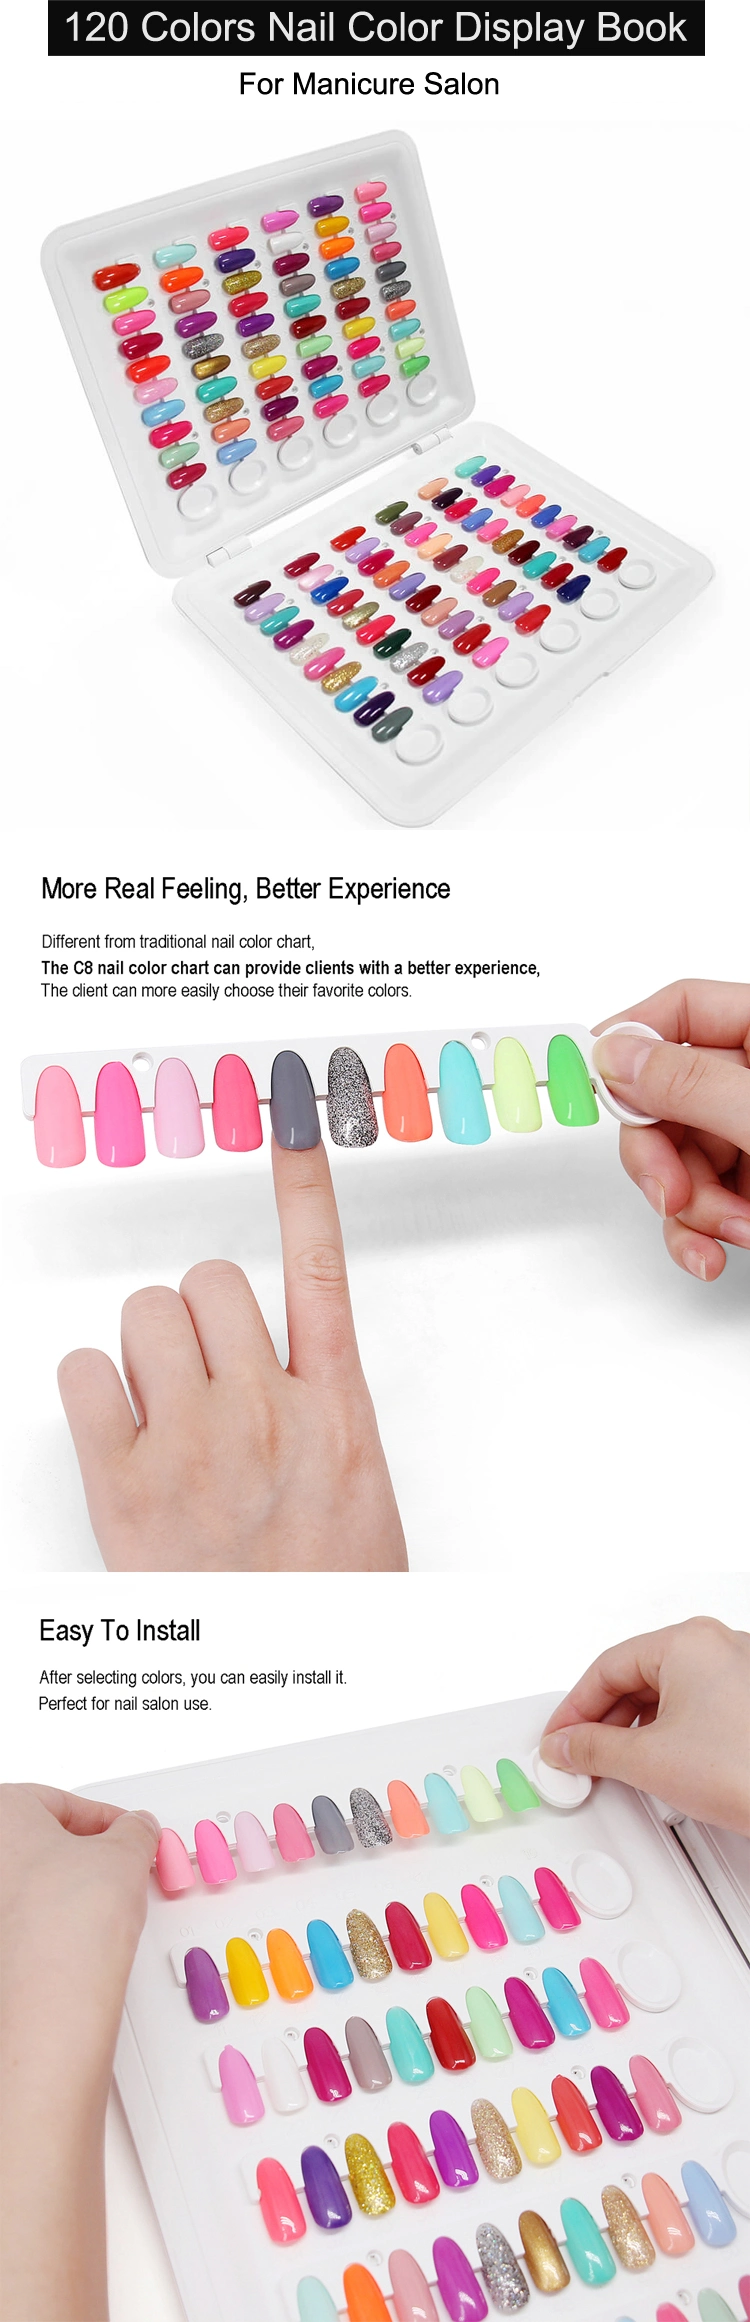 Professional Manicure Salon 120 False Nail Tips Display Card, Anti-Scratch Nail Polish Color Chart Book